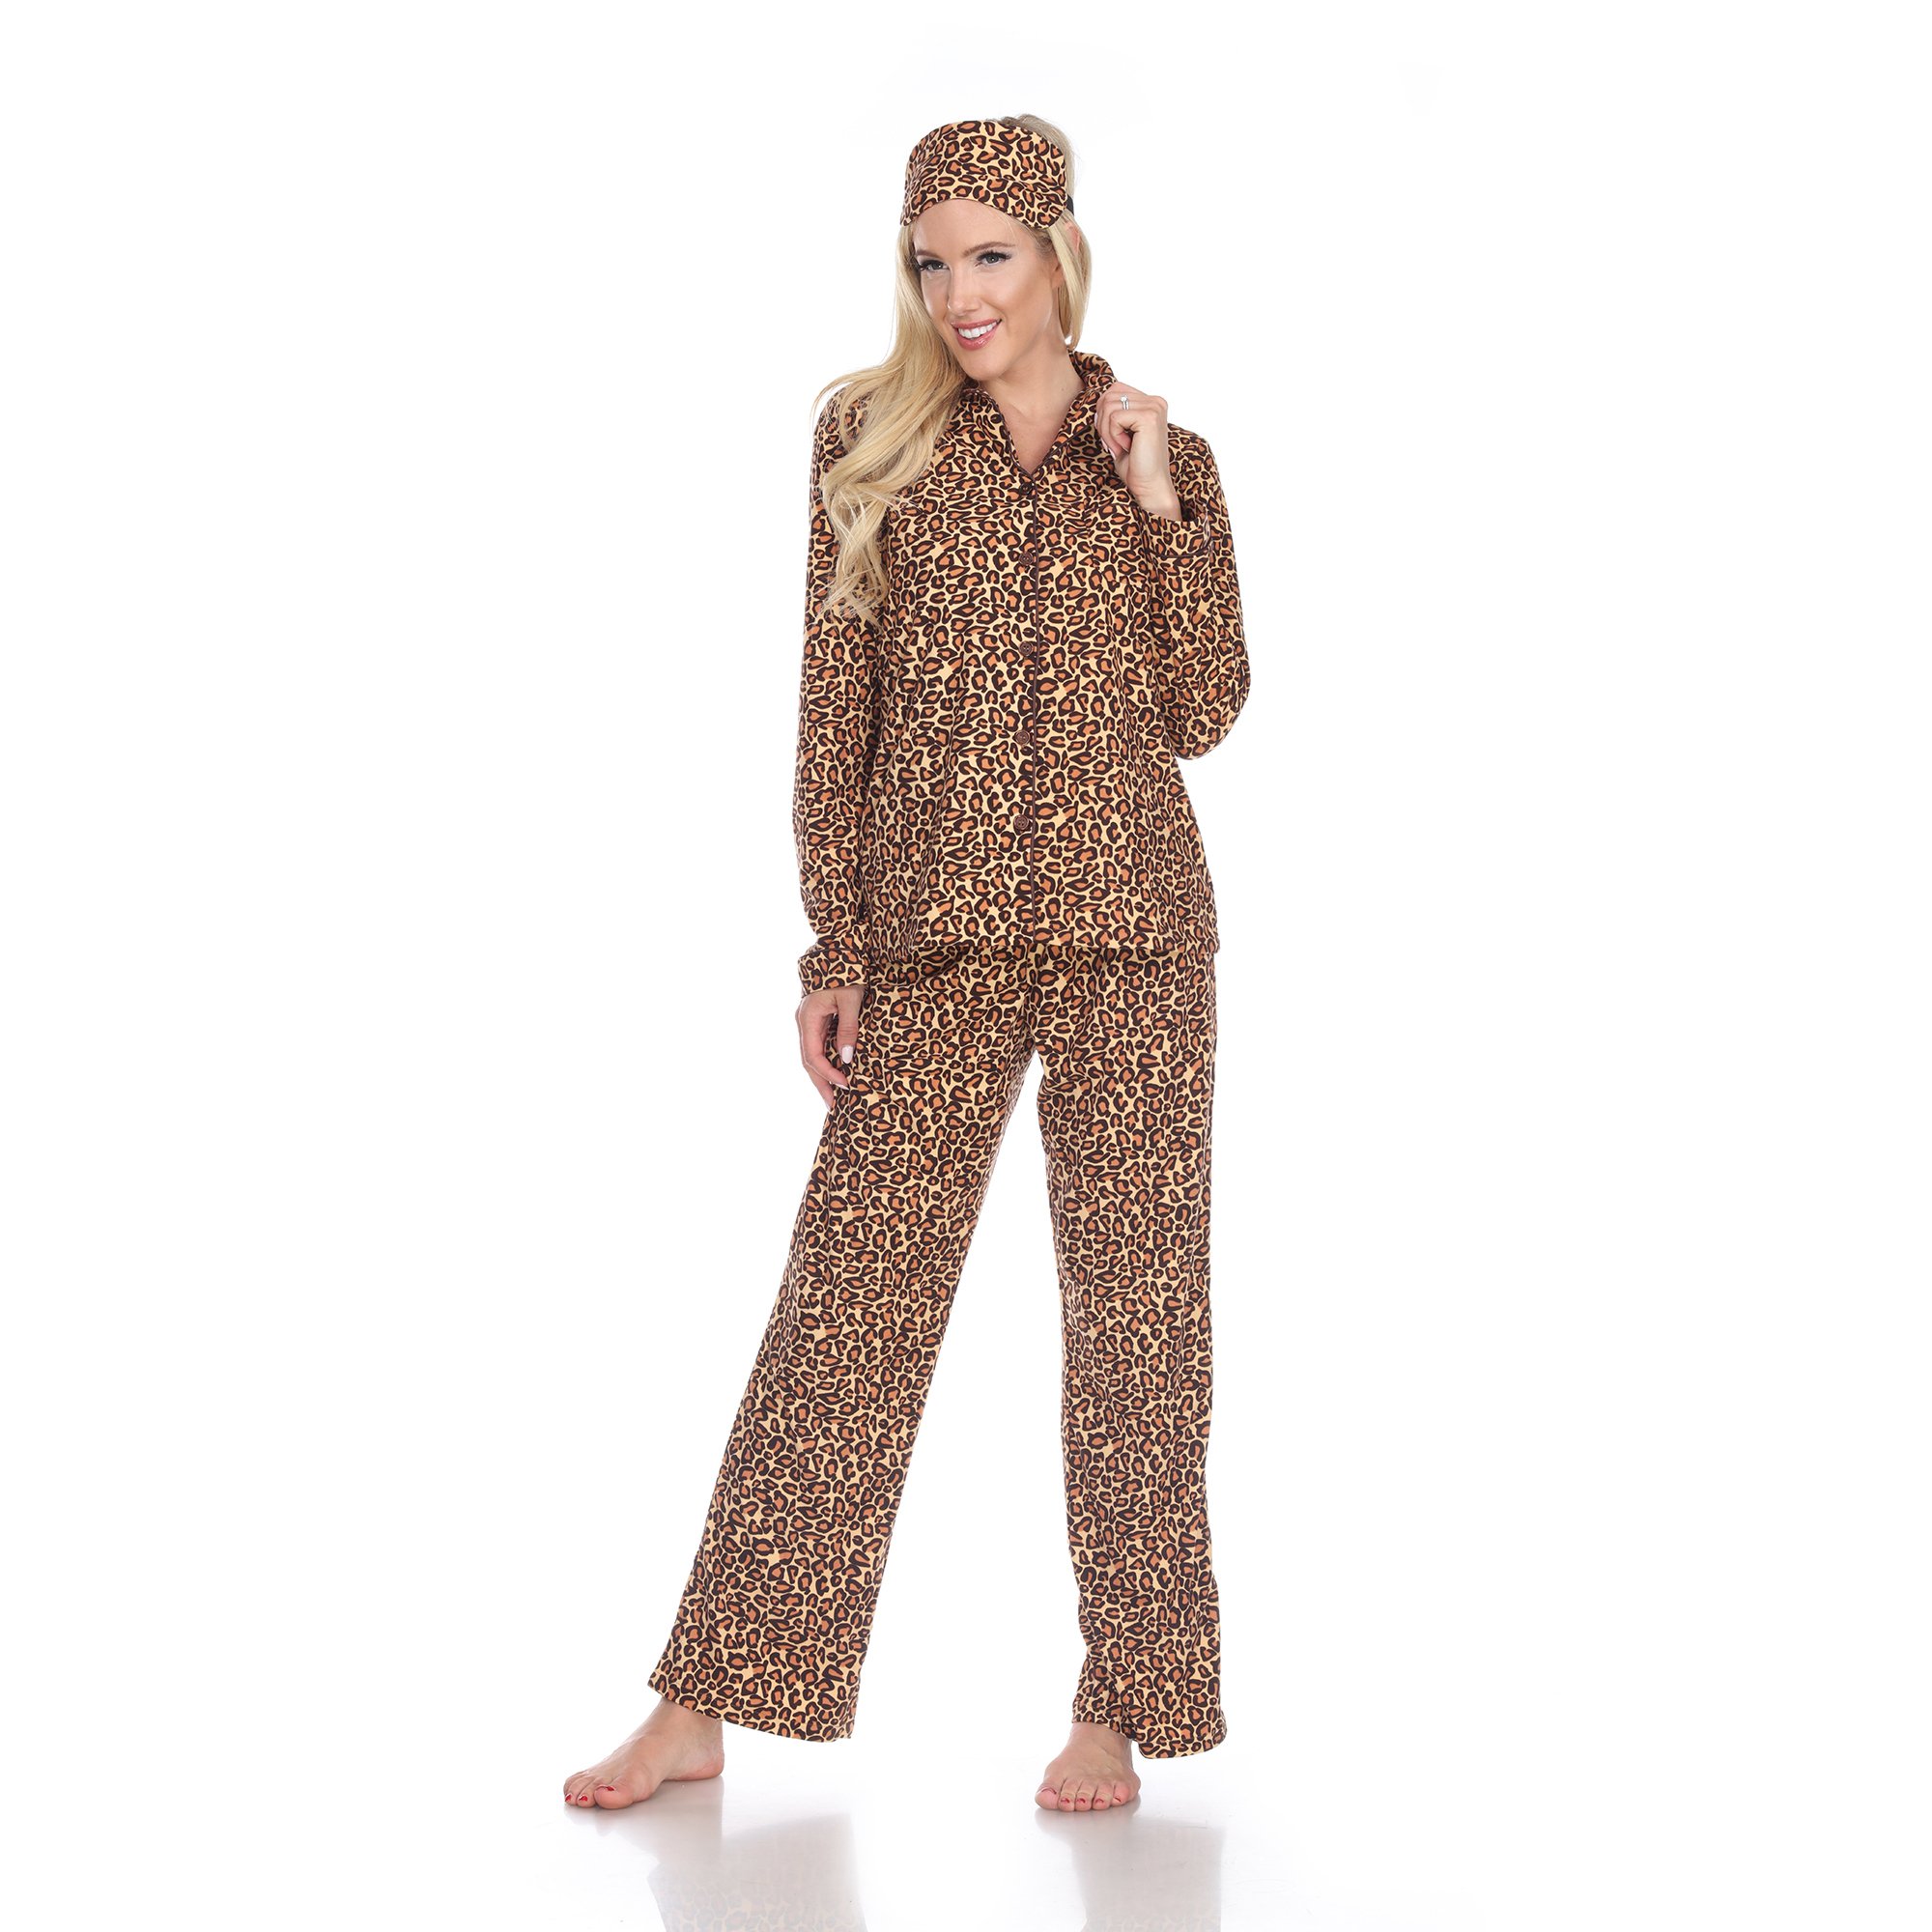 White Mark Women's Animal Print Three-Piece Pajama Set - Brown Cheetah, Large